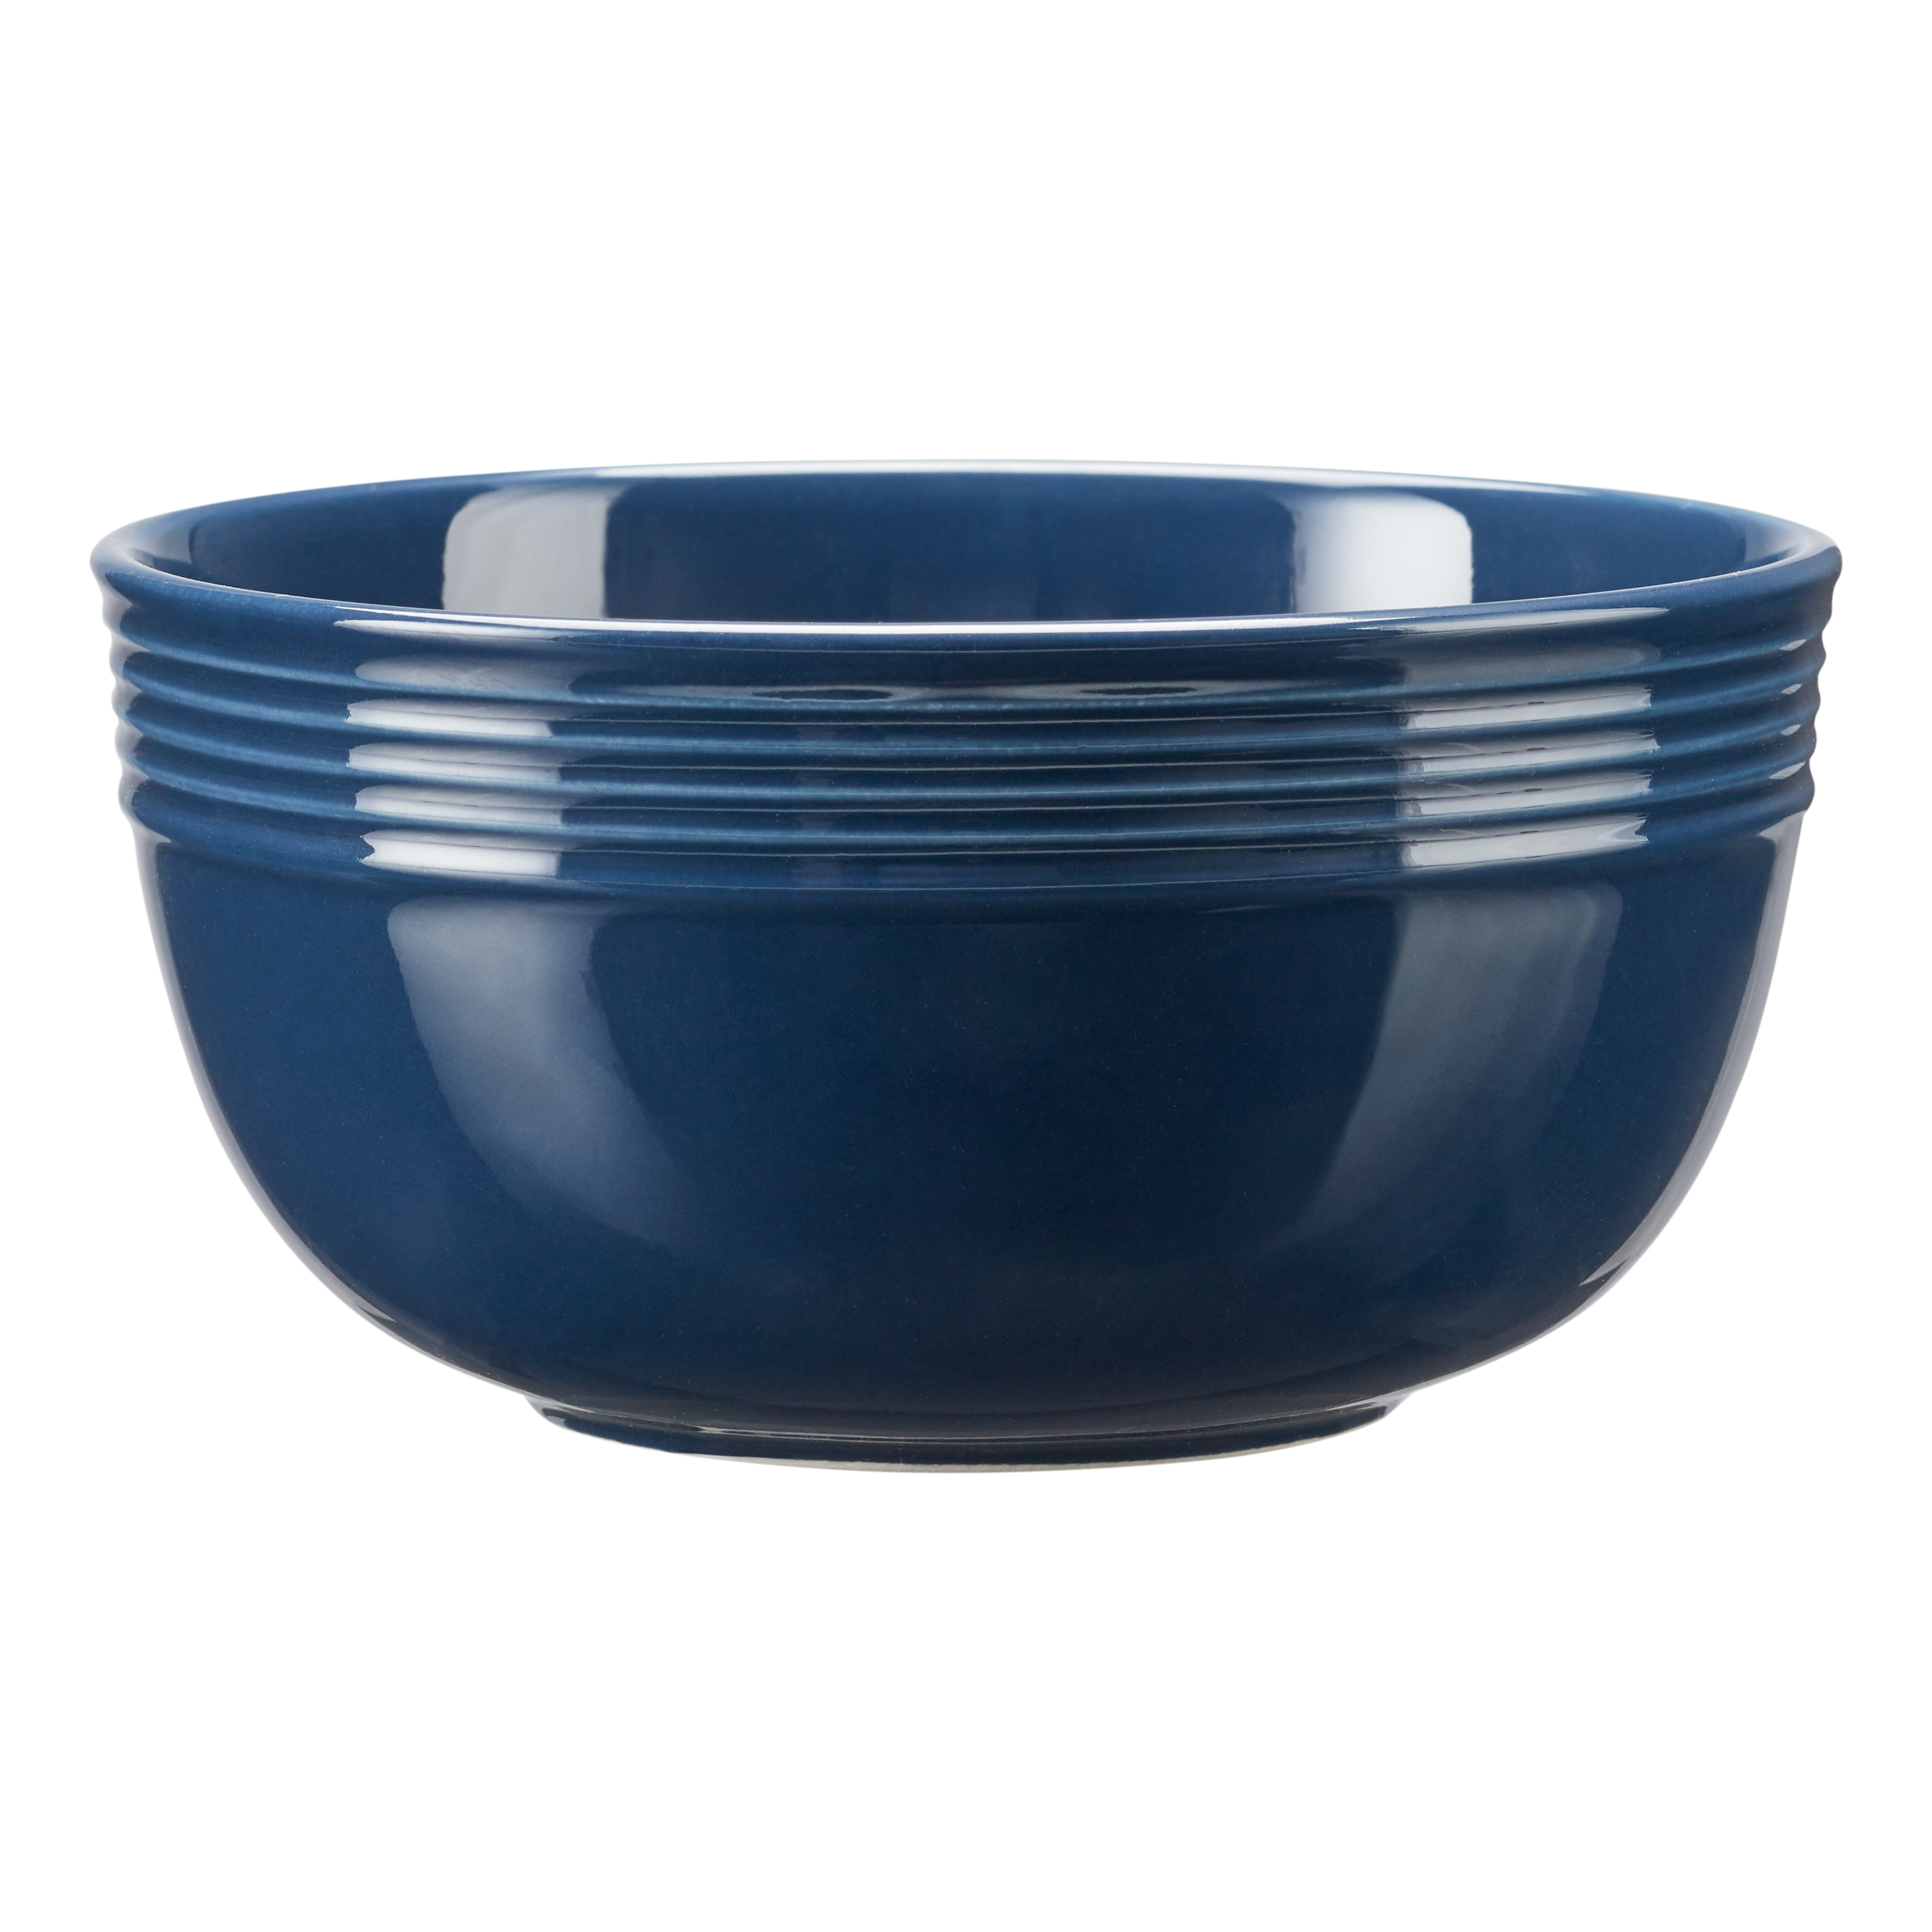 Mainstays Chiara Stoneware 6.25" Round Navy Blue Bowl - image 1 of 4